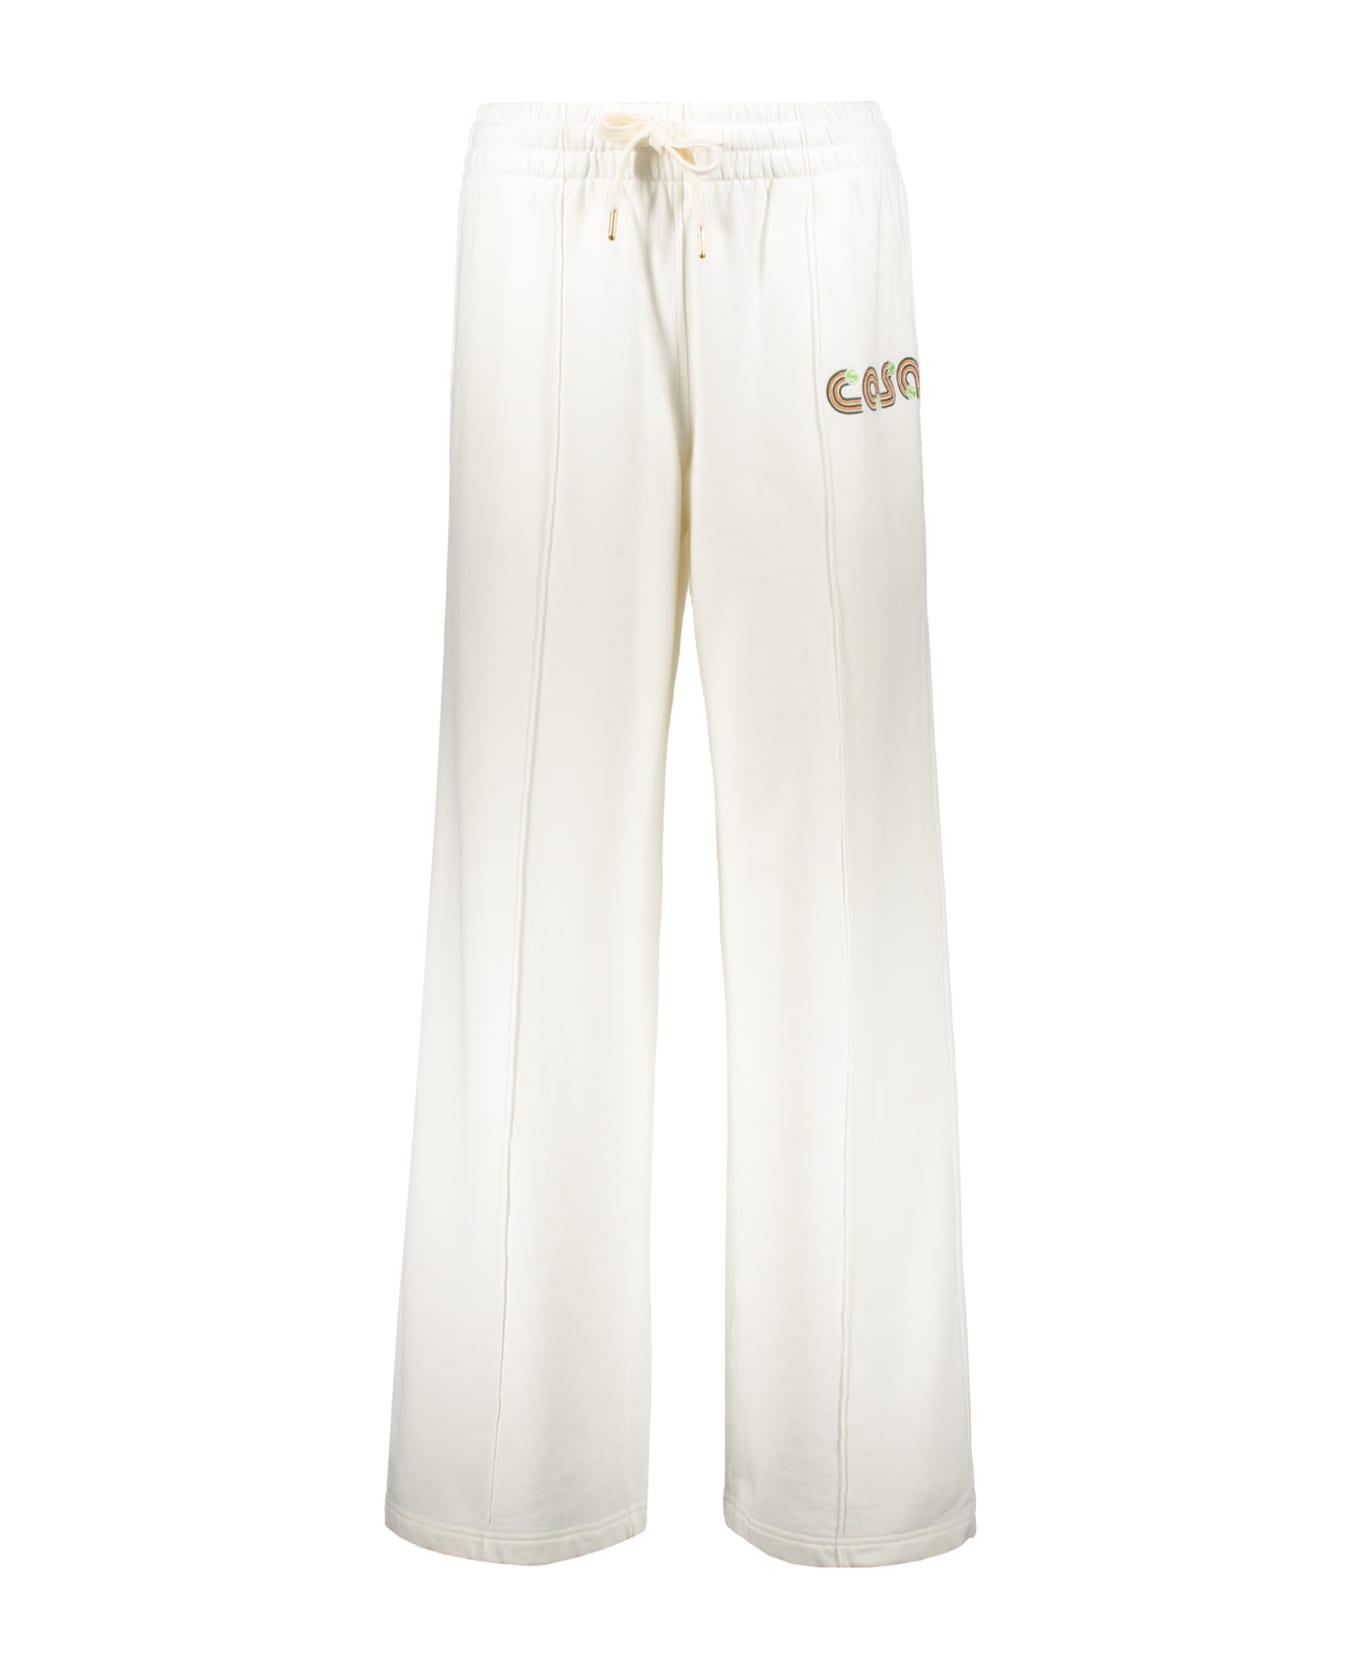 Casablanca White Cotton Pants - White